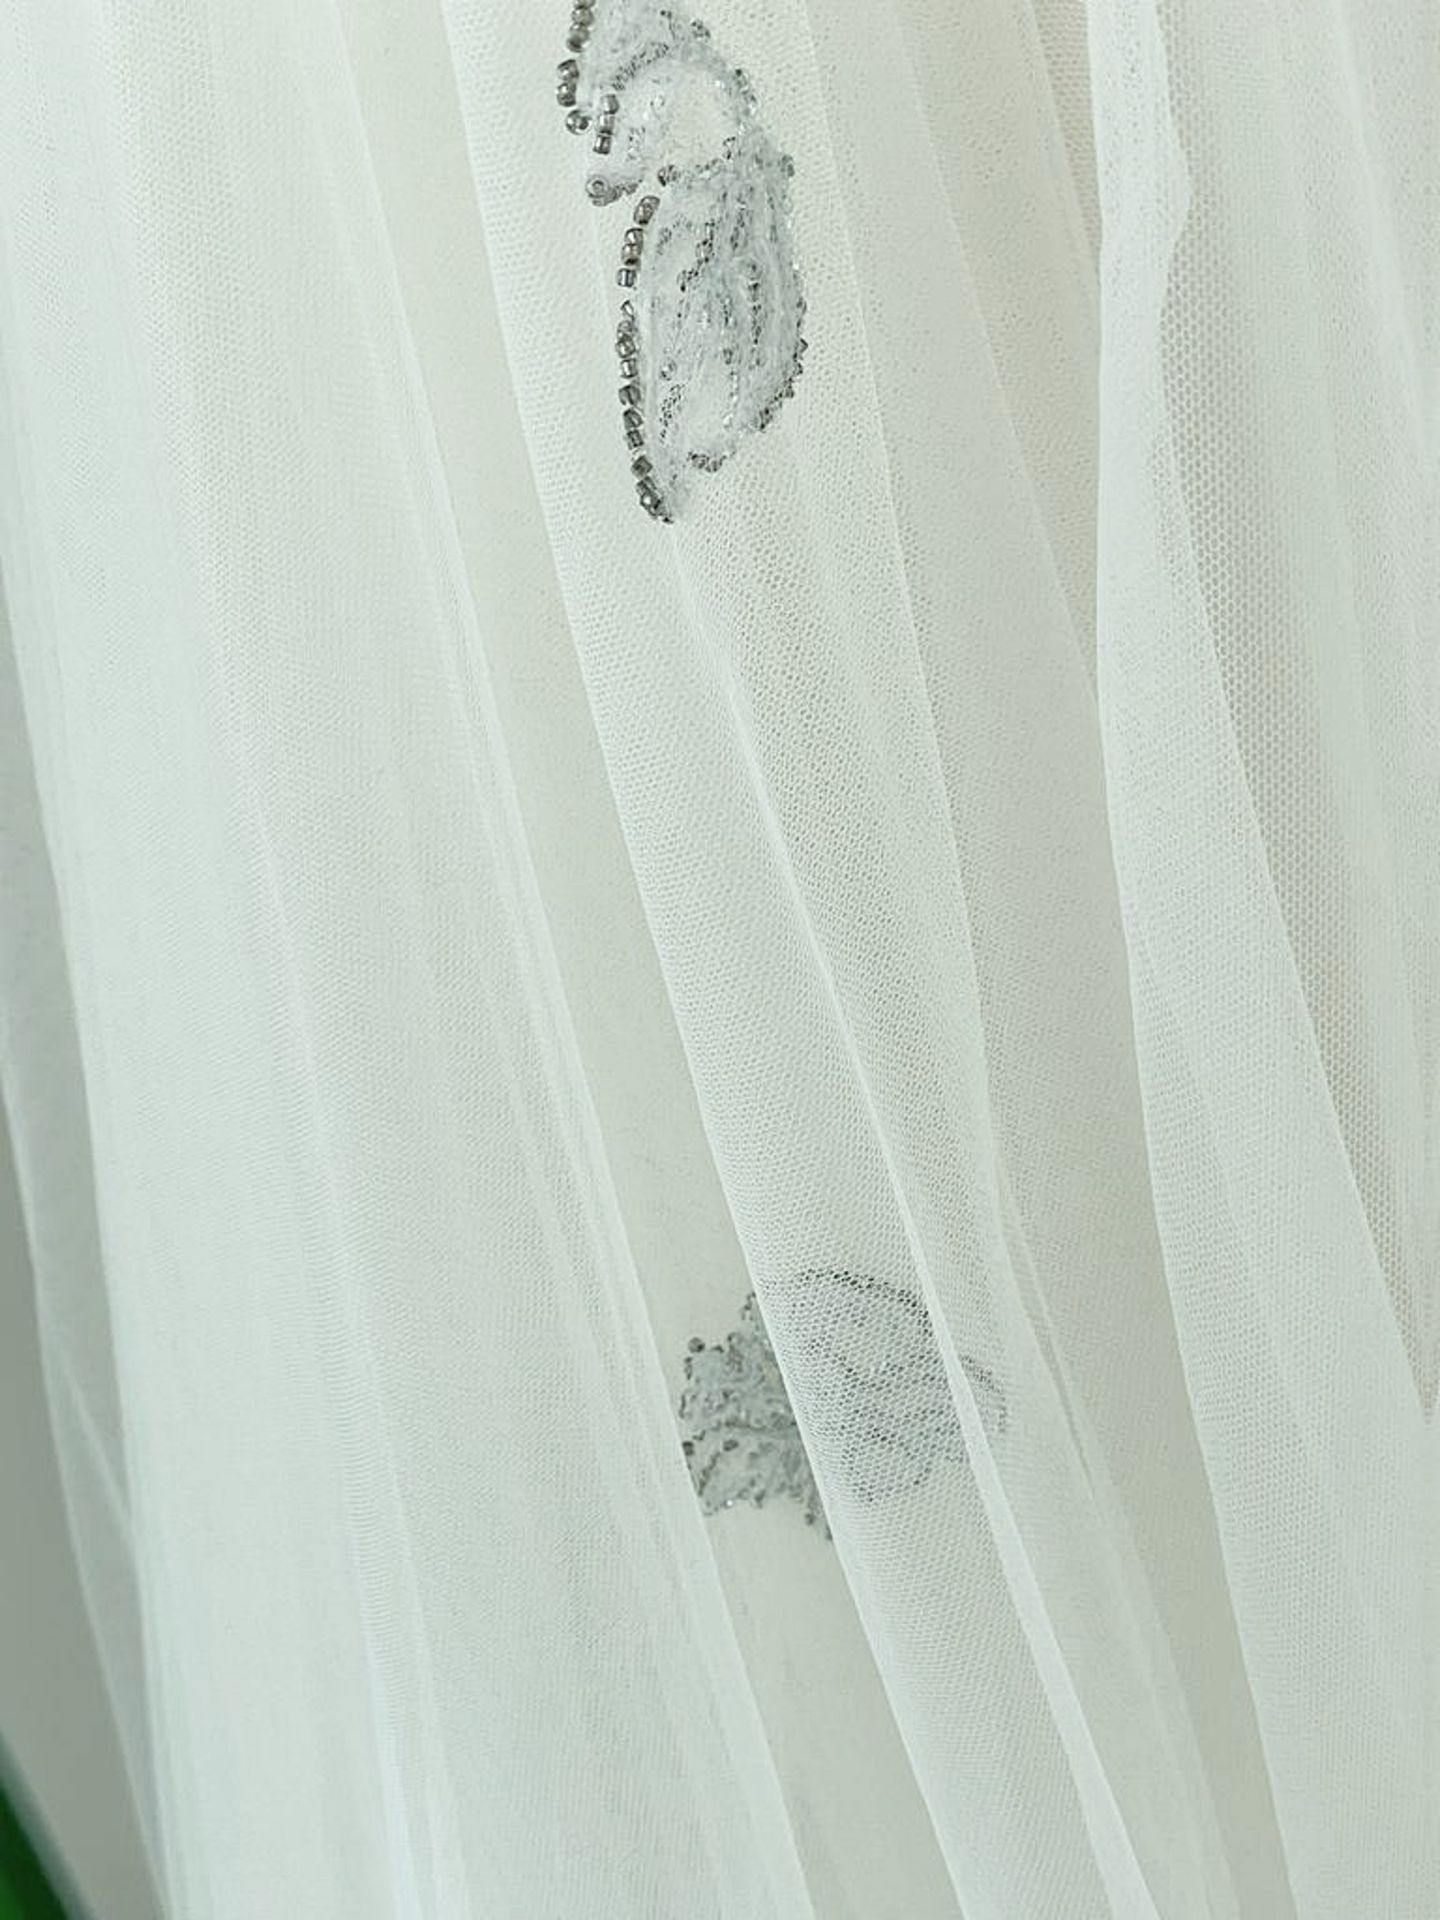 1 x ANNASUL Y 'Cameron' Designer Wedding Dress Bridal Gown - Size: UK 12 - Ref: DRS043 - CL823 - - Image 4 of 13